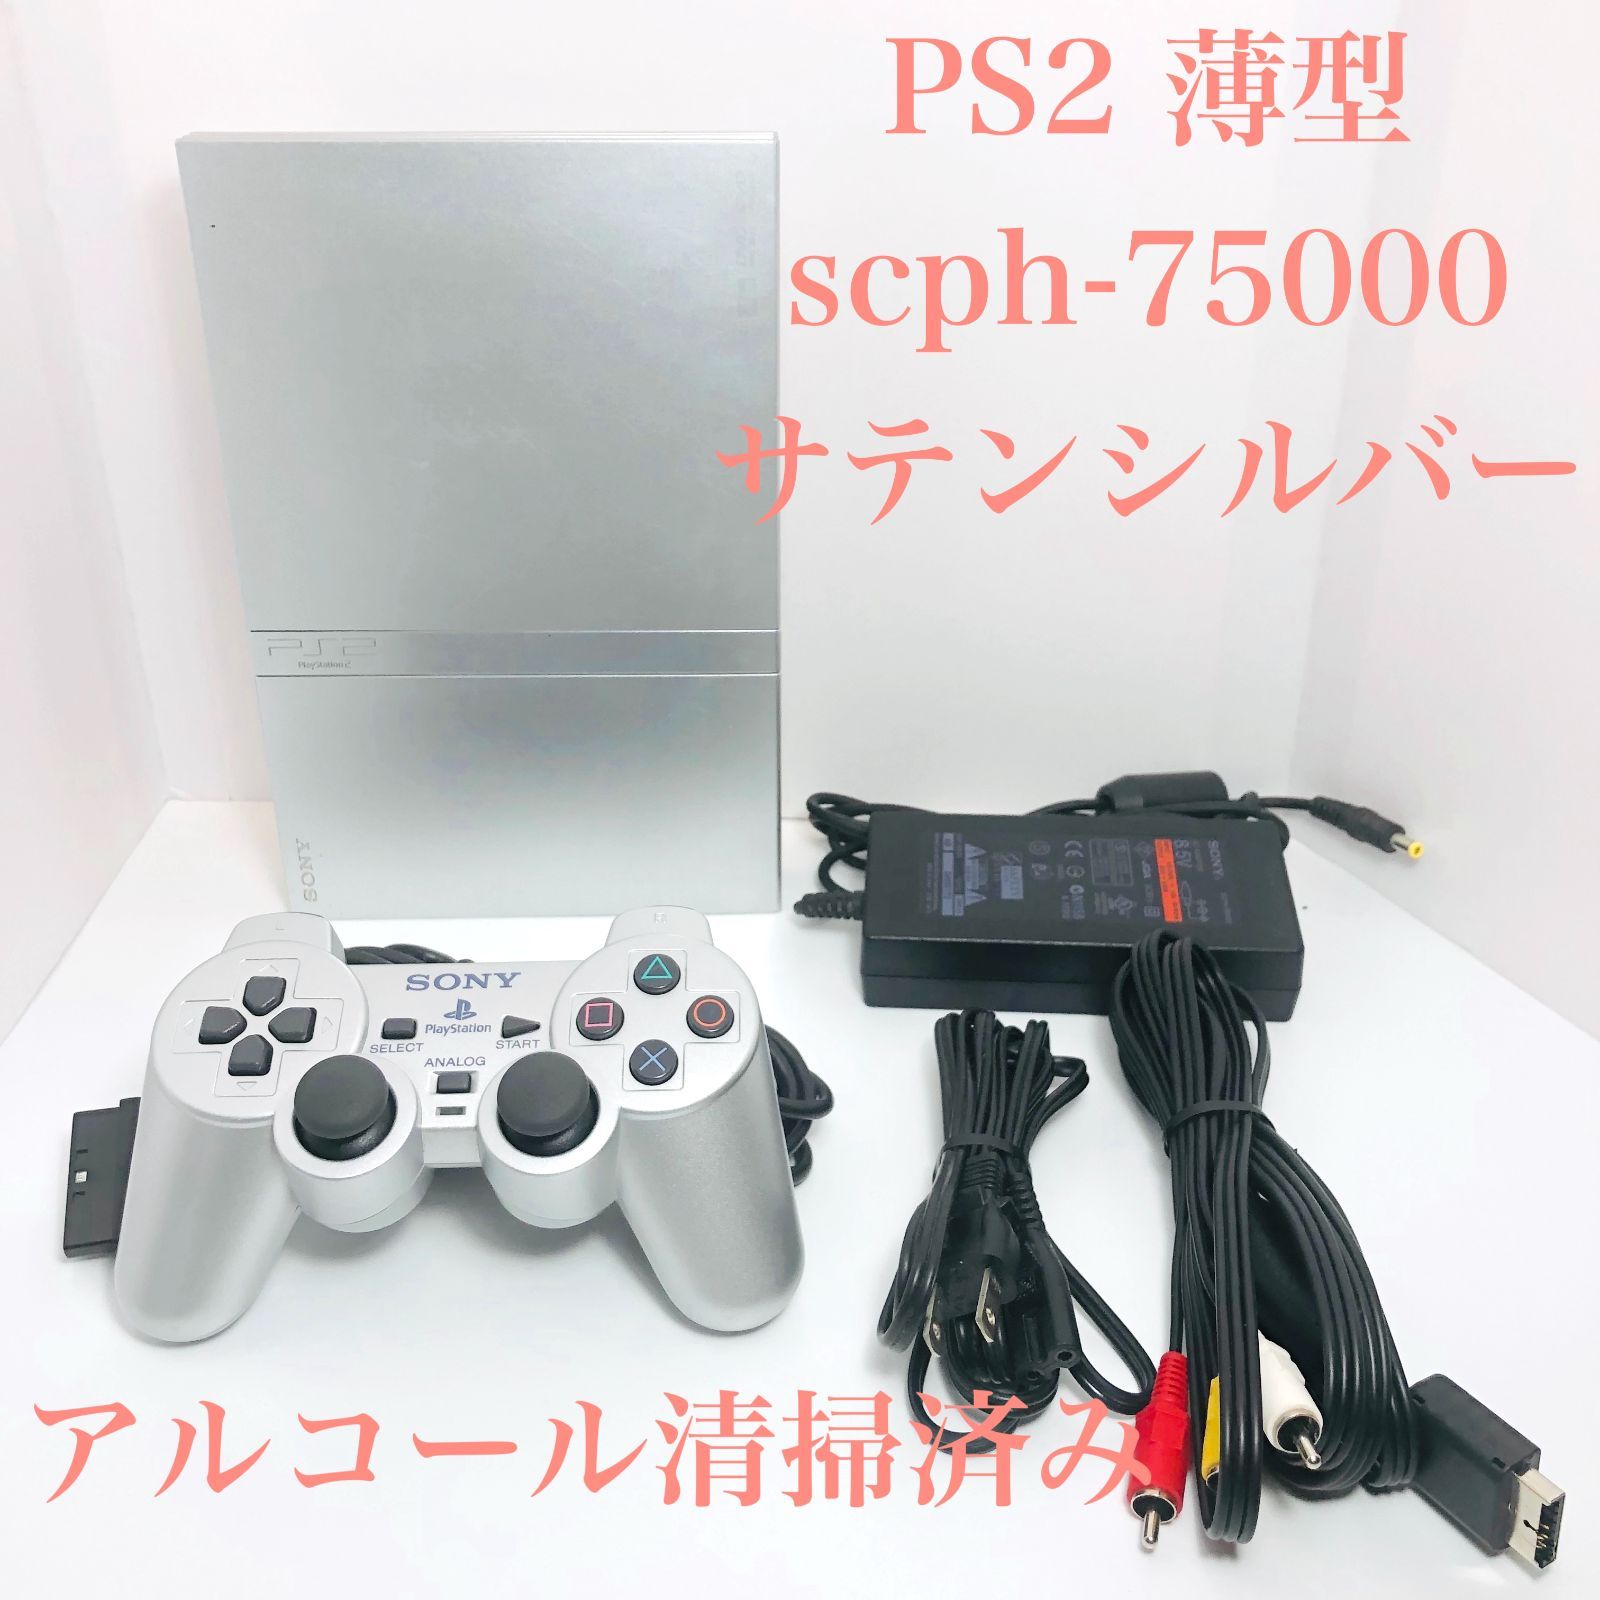 PS2 SCPH-75000 sss 本体セット 12-16